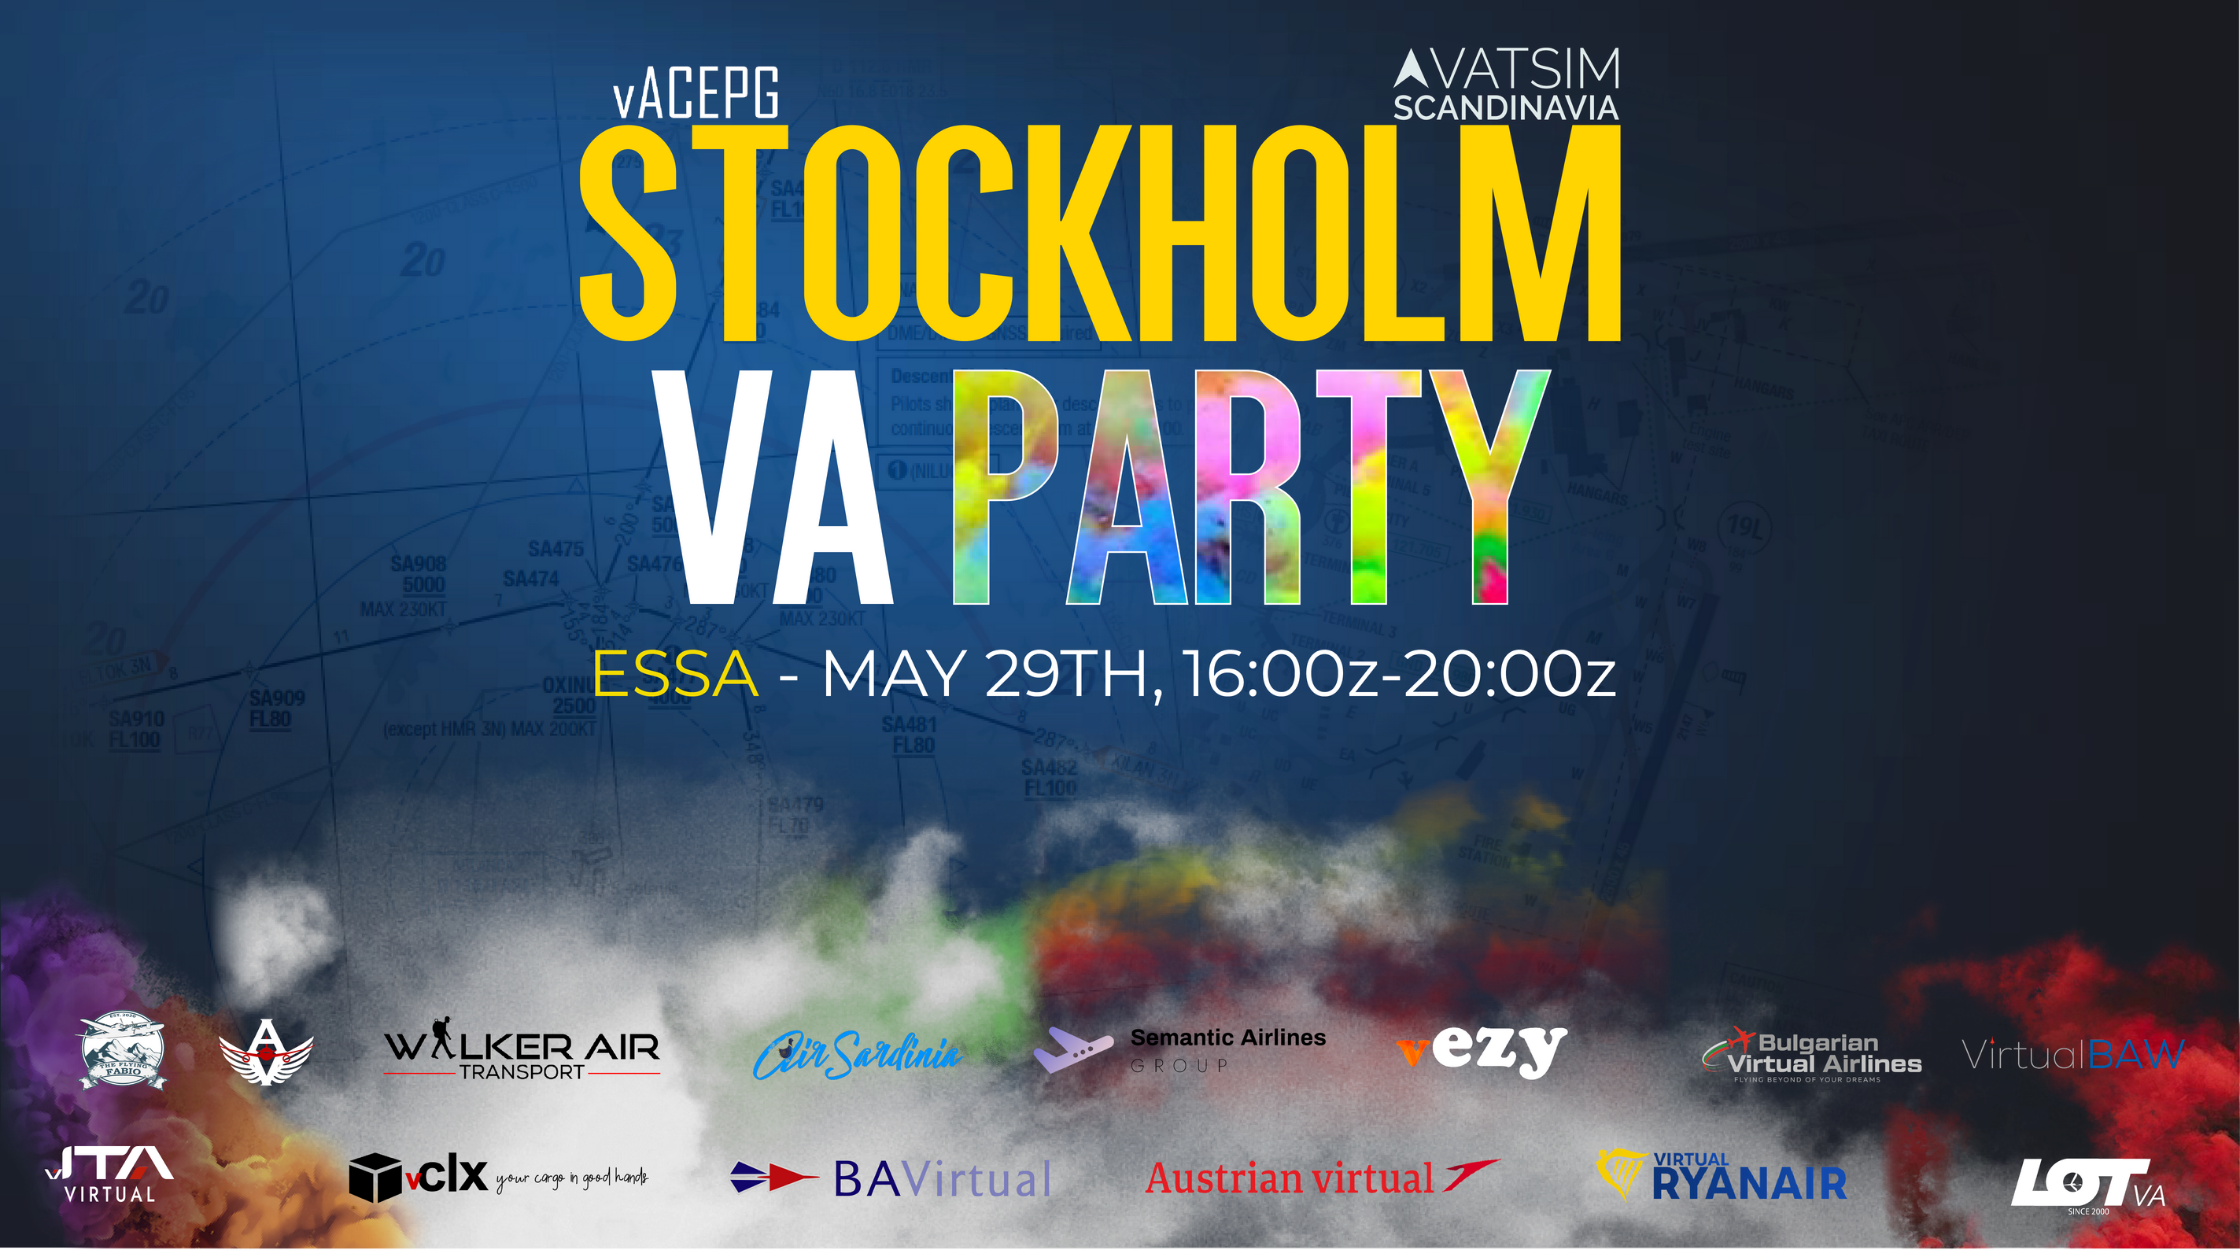 STOCKHOLM VA PARTY